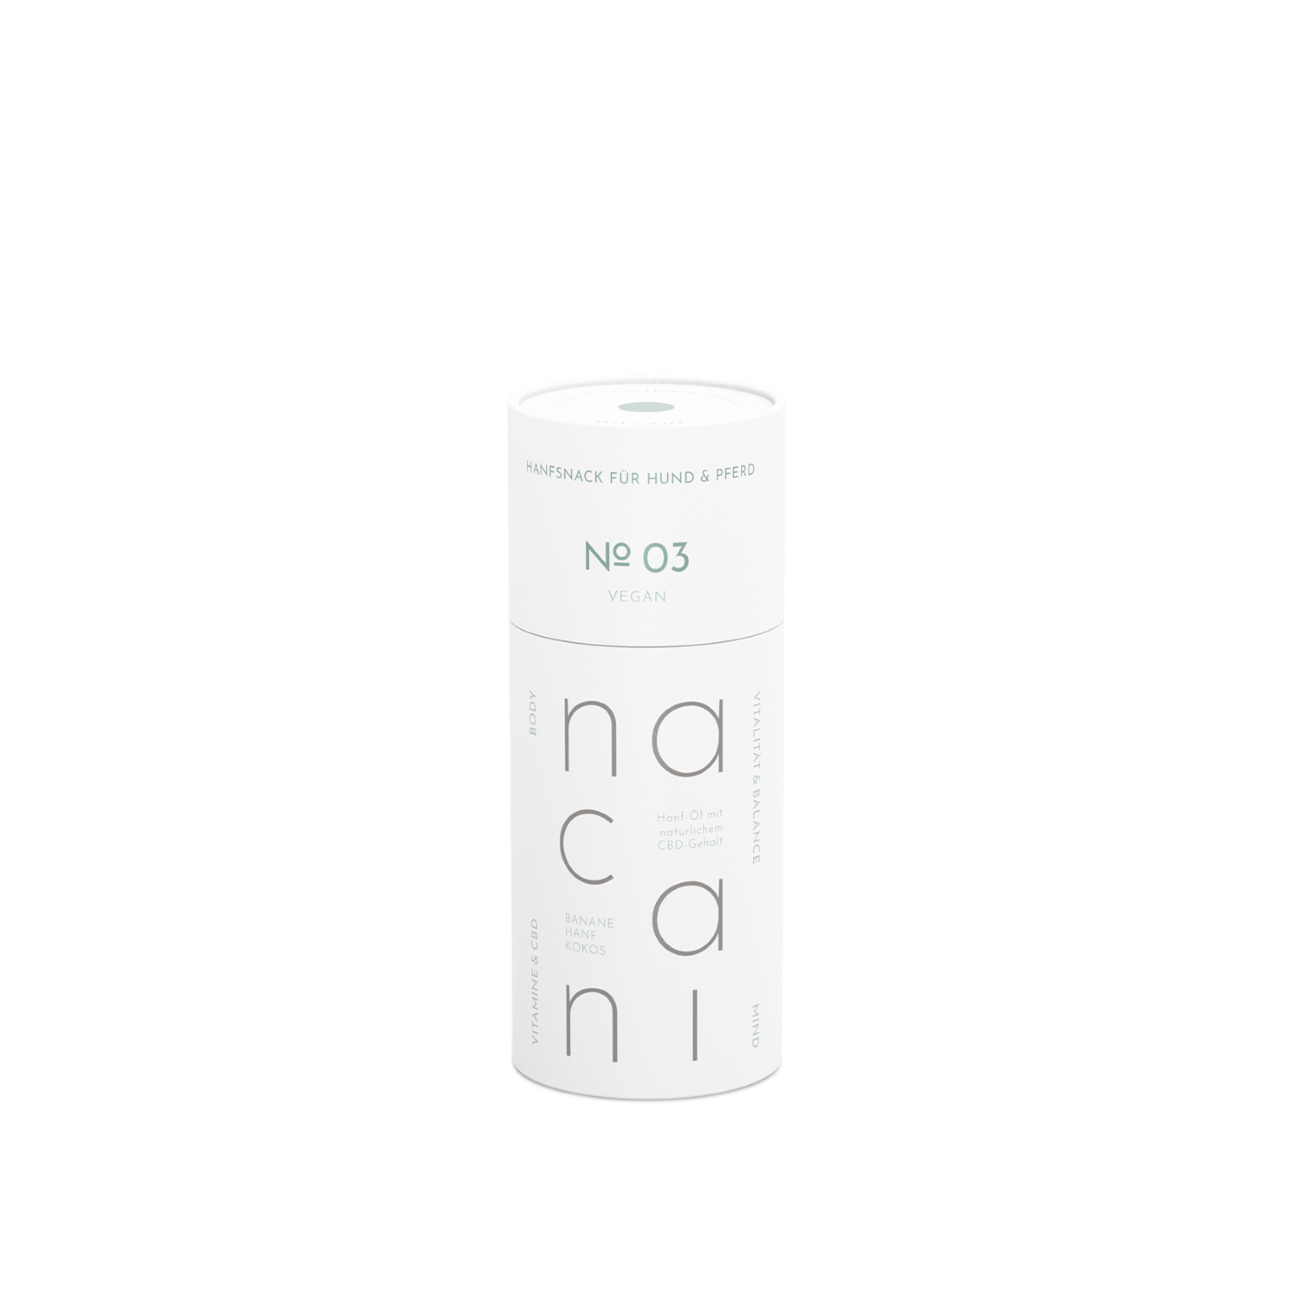 Nacani | Hanf-Leckerli vegan mit natürlichem CBD-Anteil